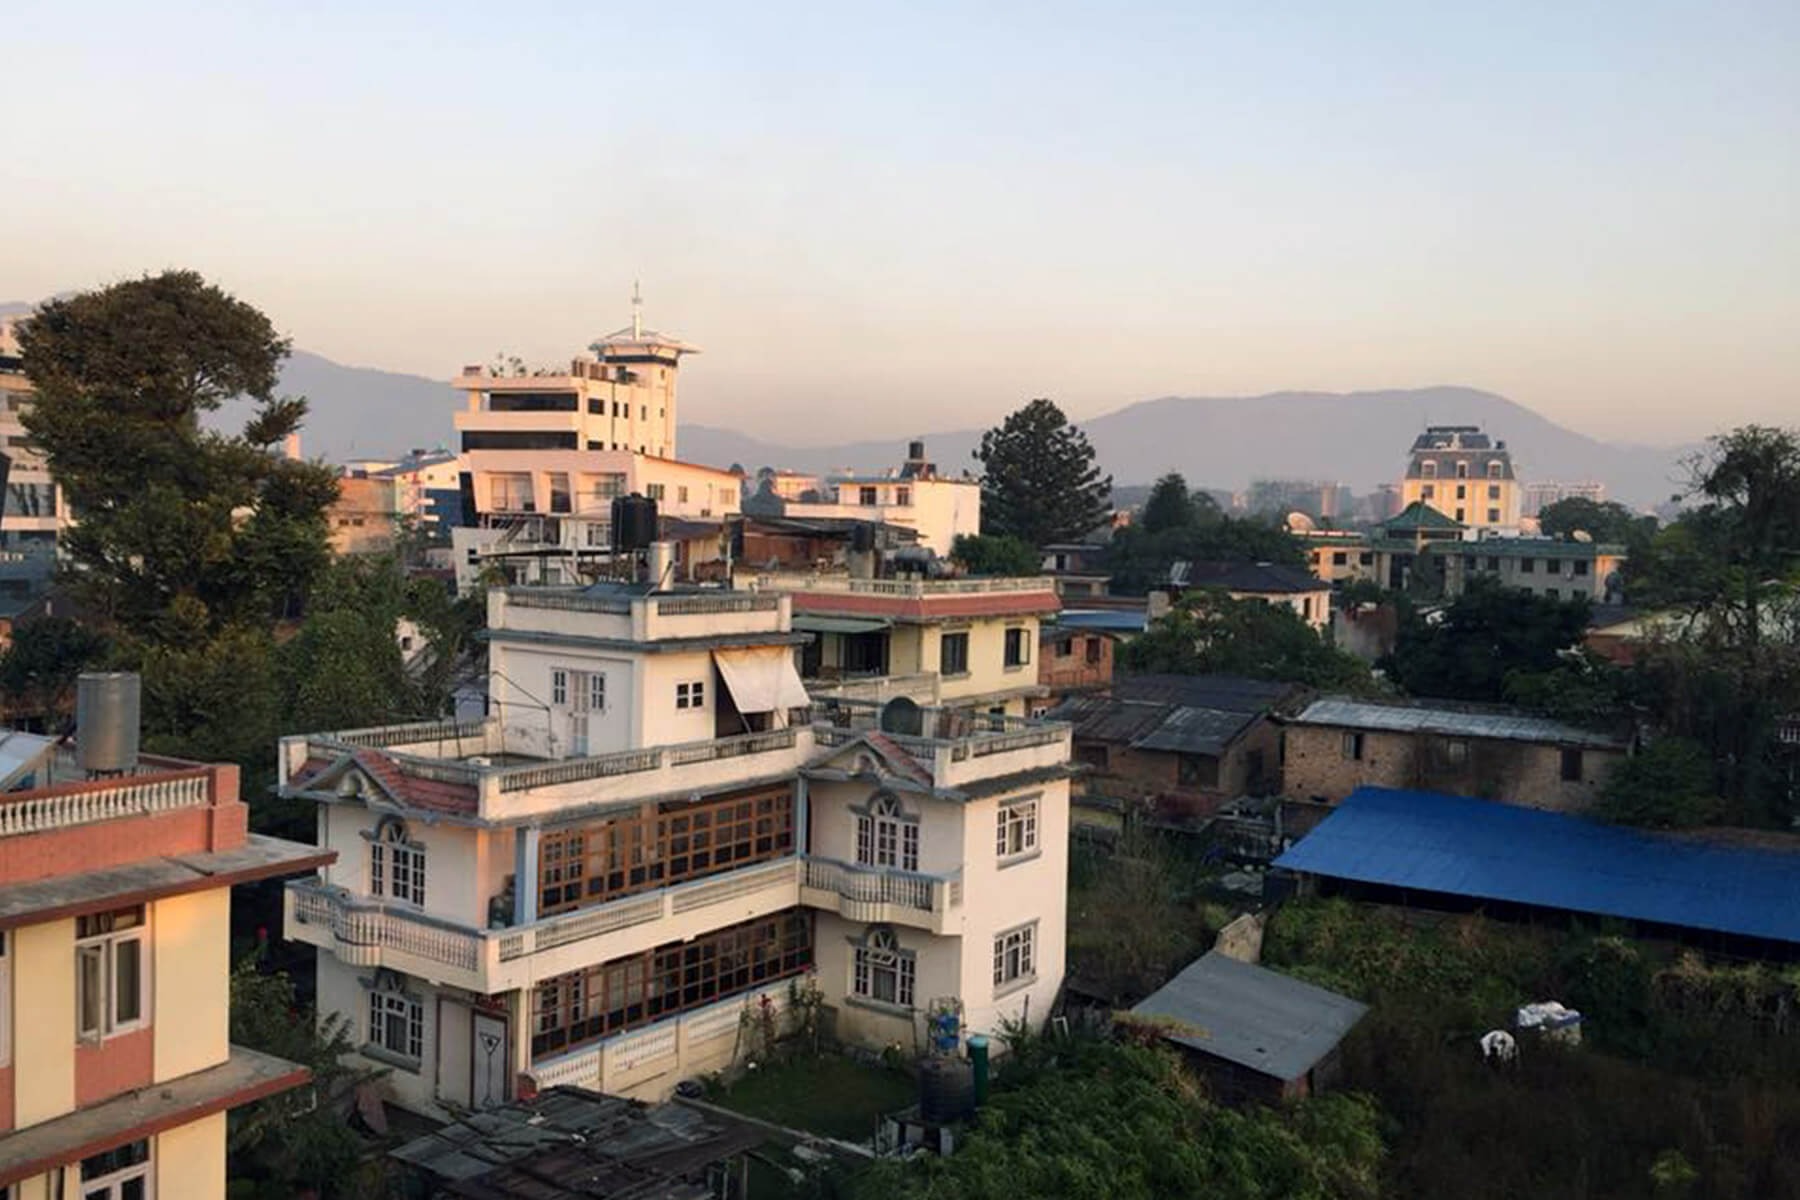 The beautiful city of Kathmandu